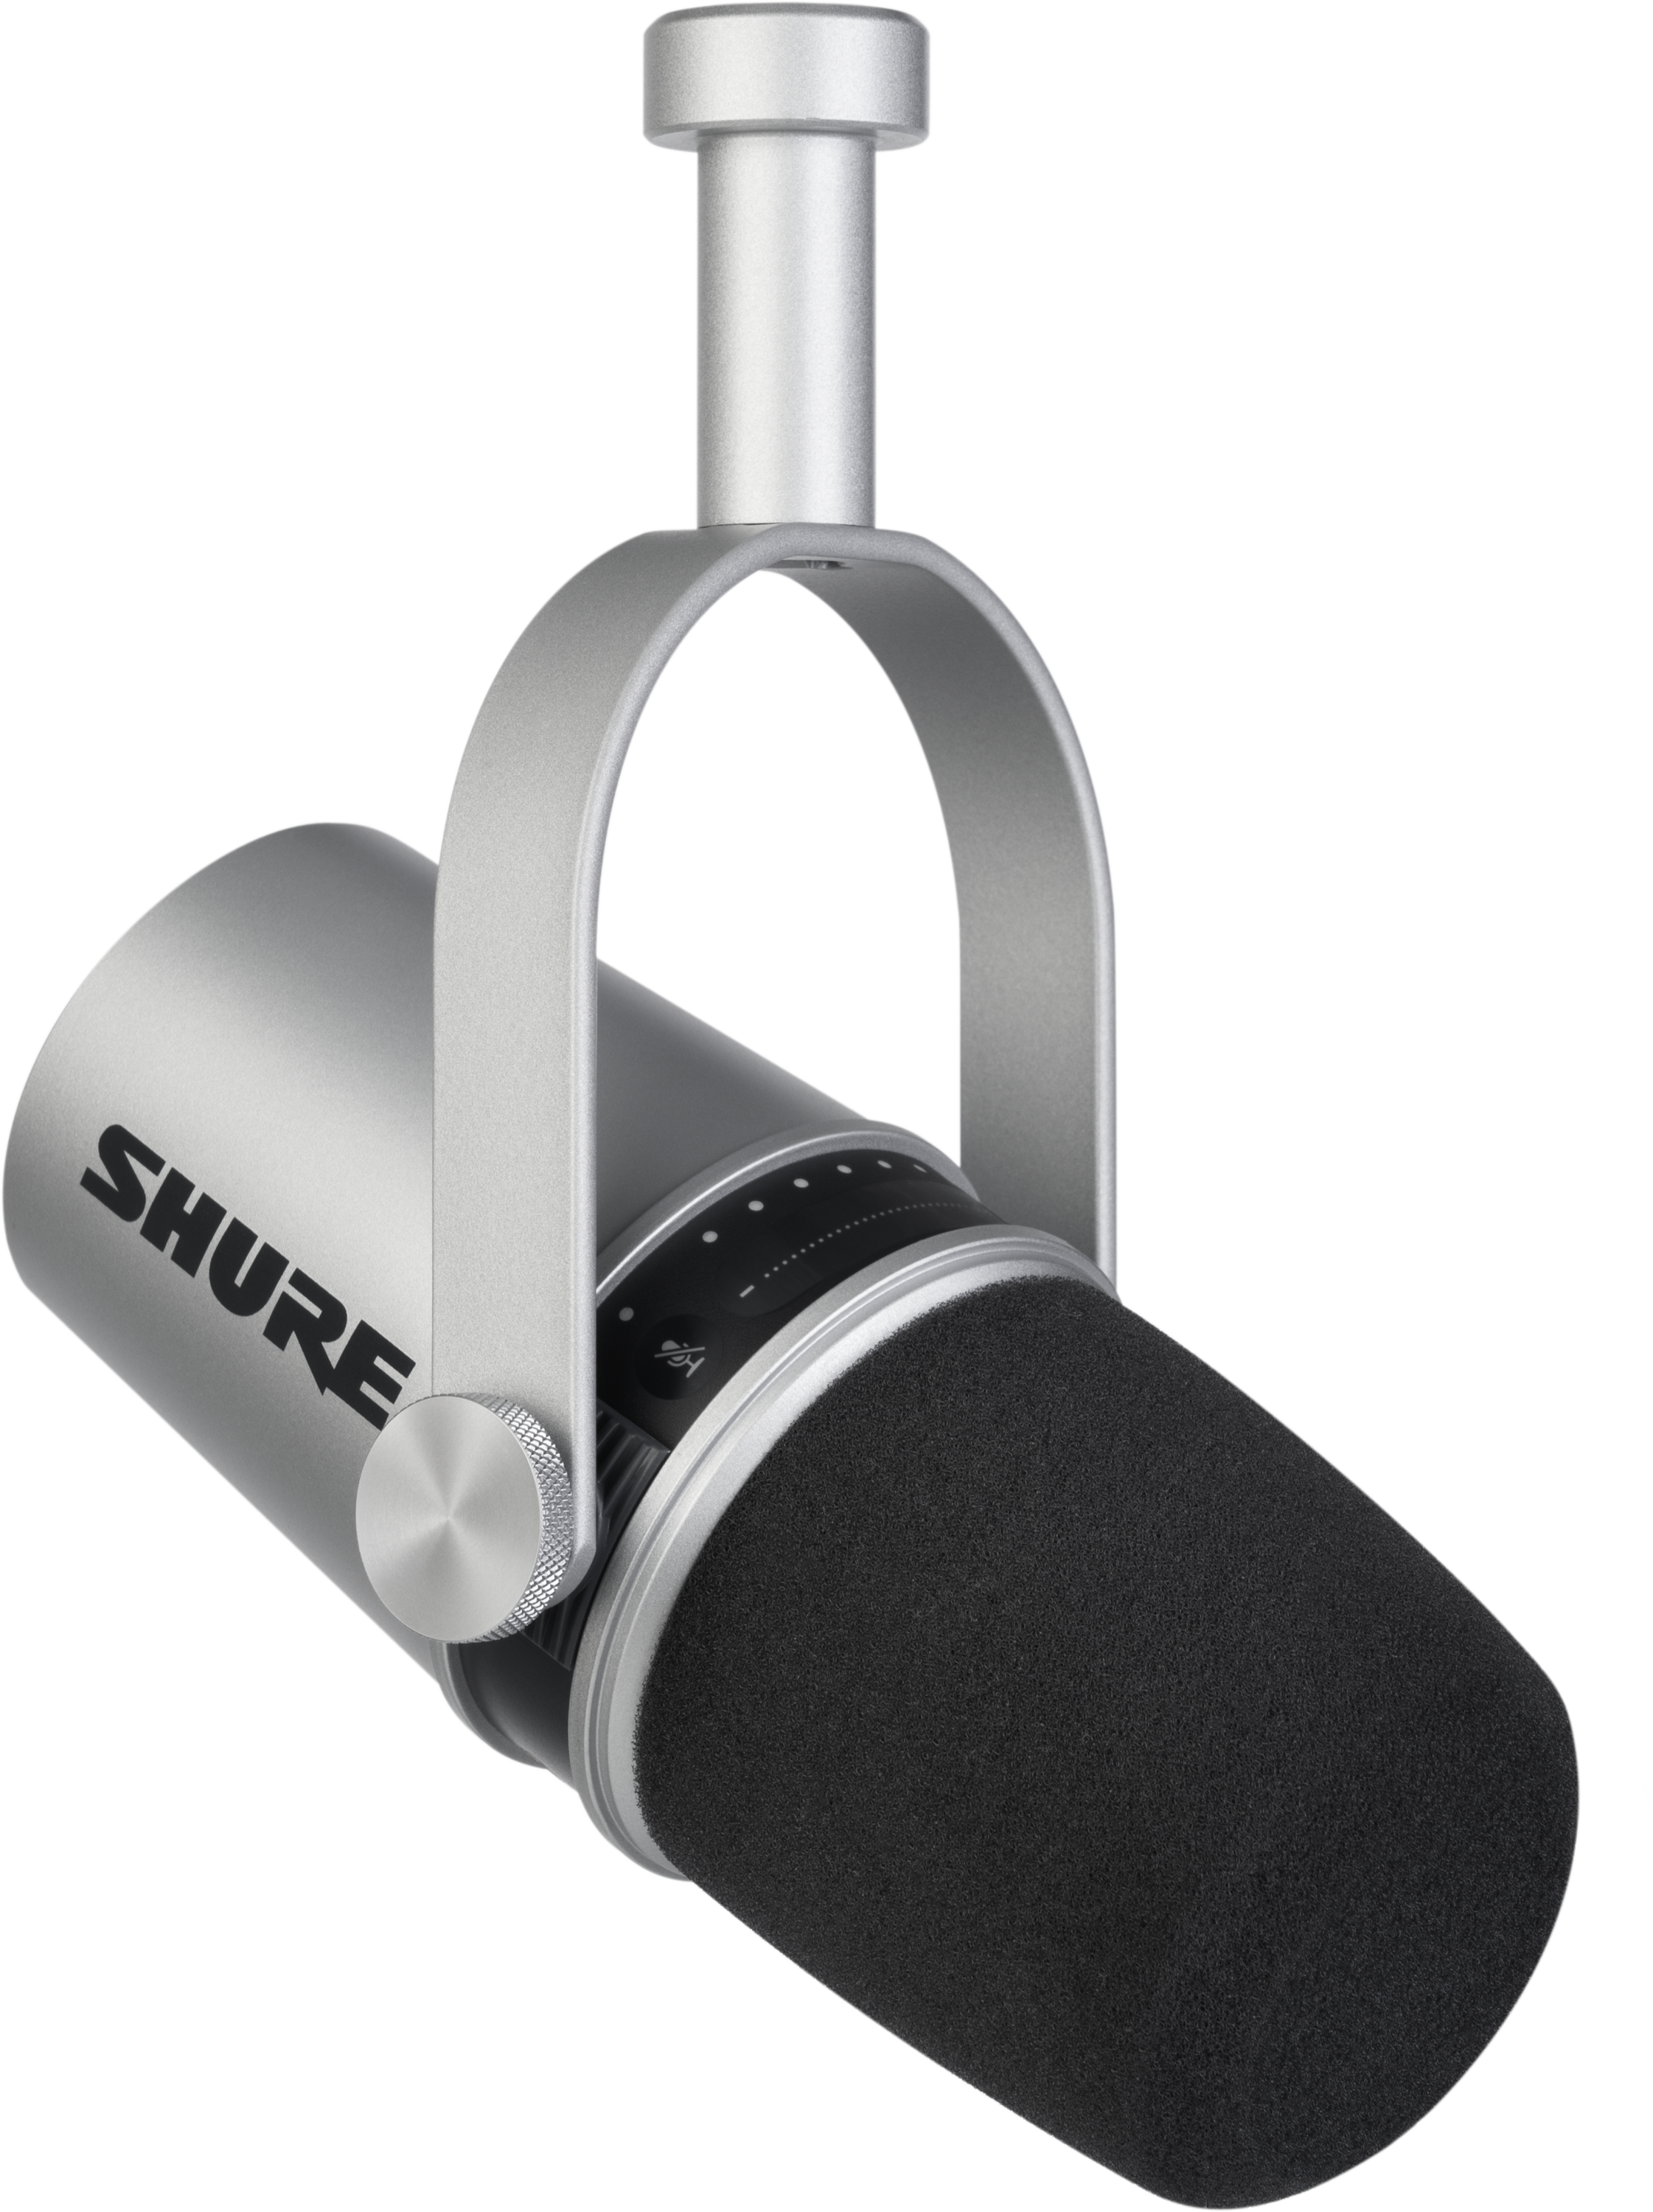 Bundled Item: Shure MV7 USB Podcast Microphone - Silver